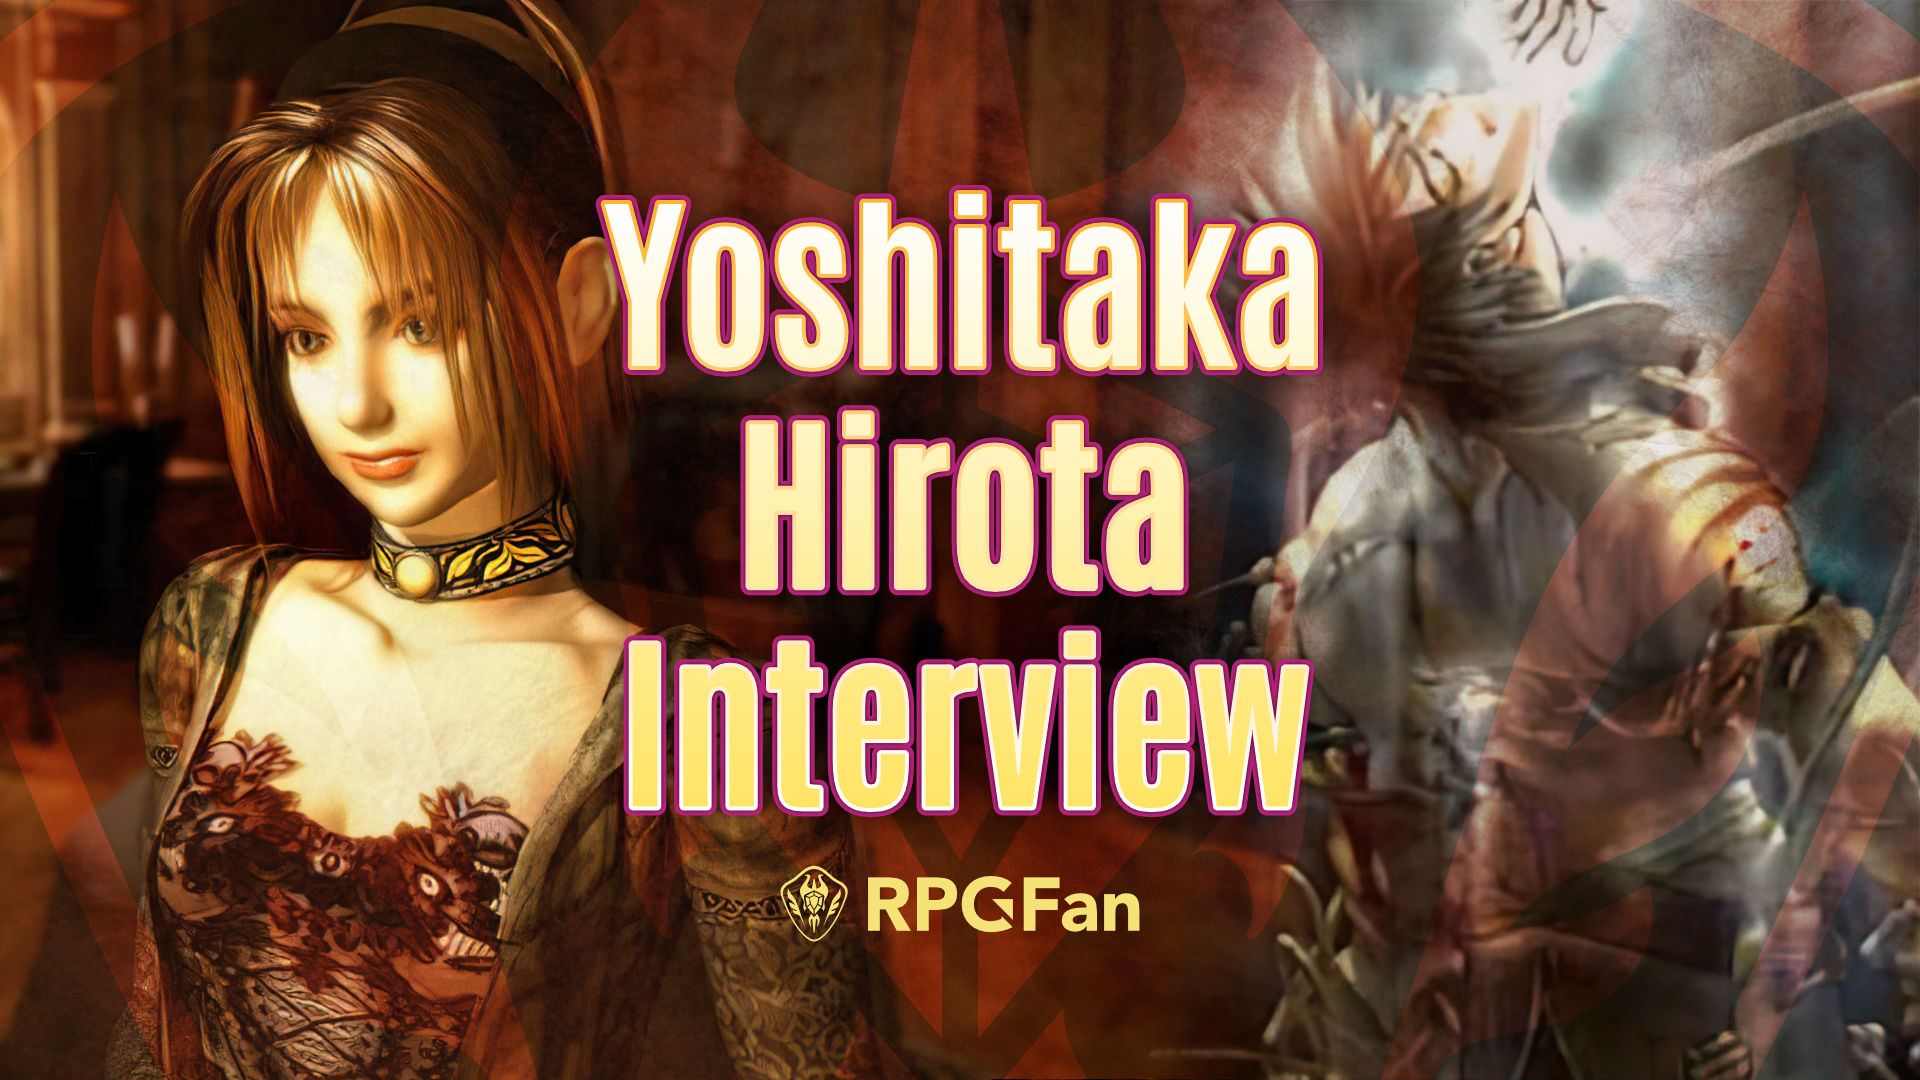 Yoshitaka Hirota Interview Featured